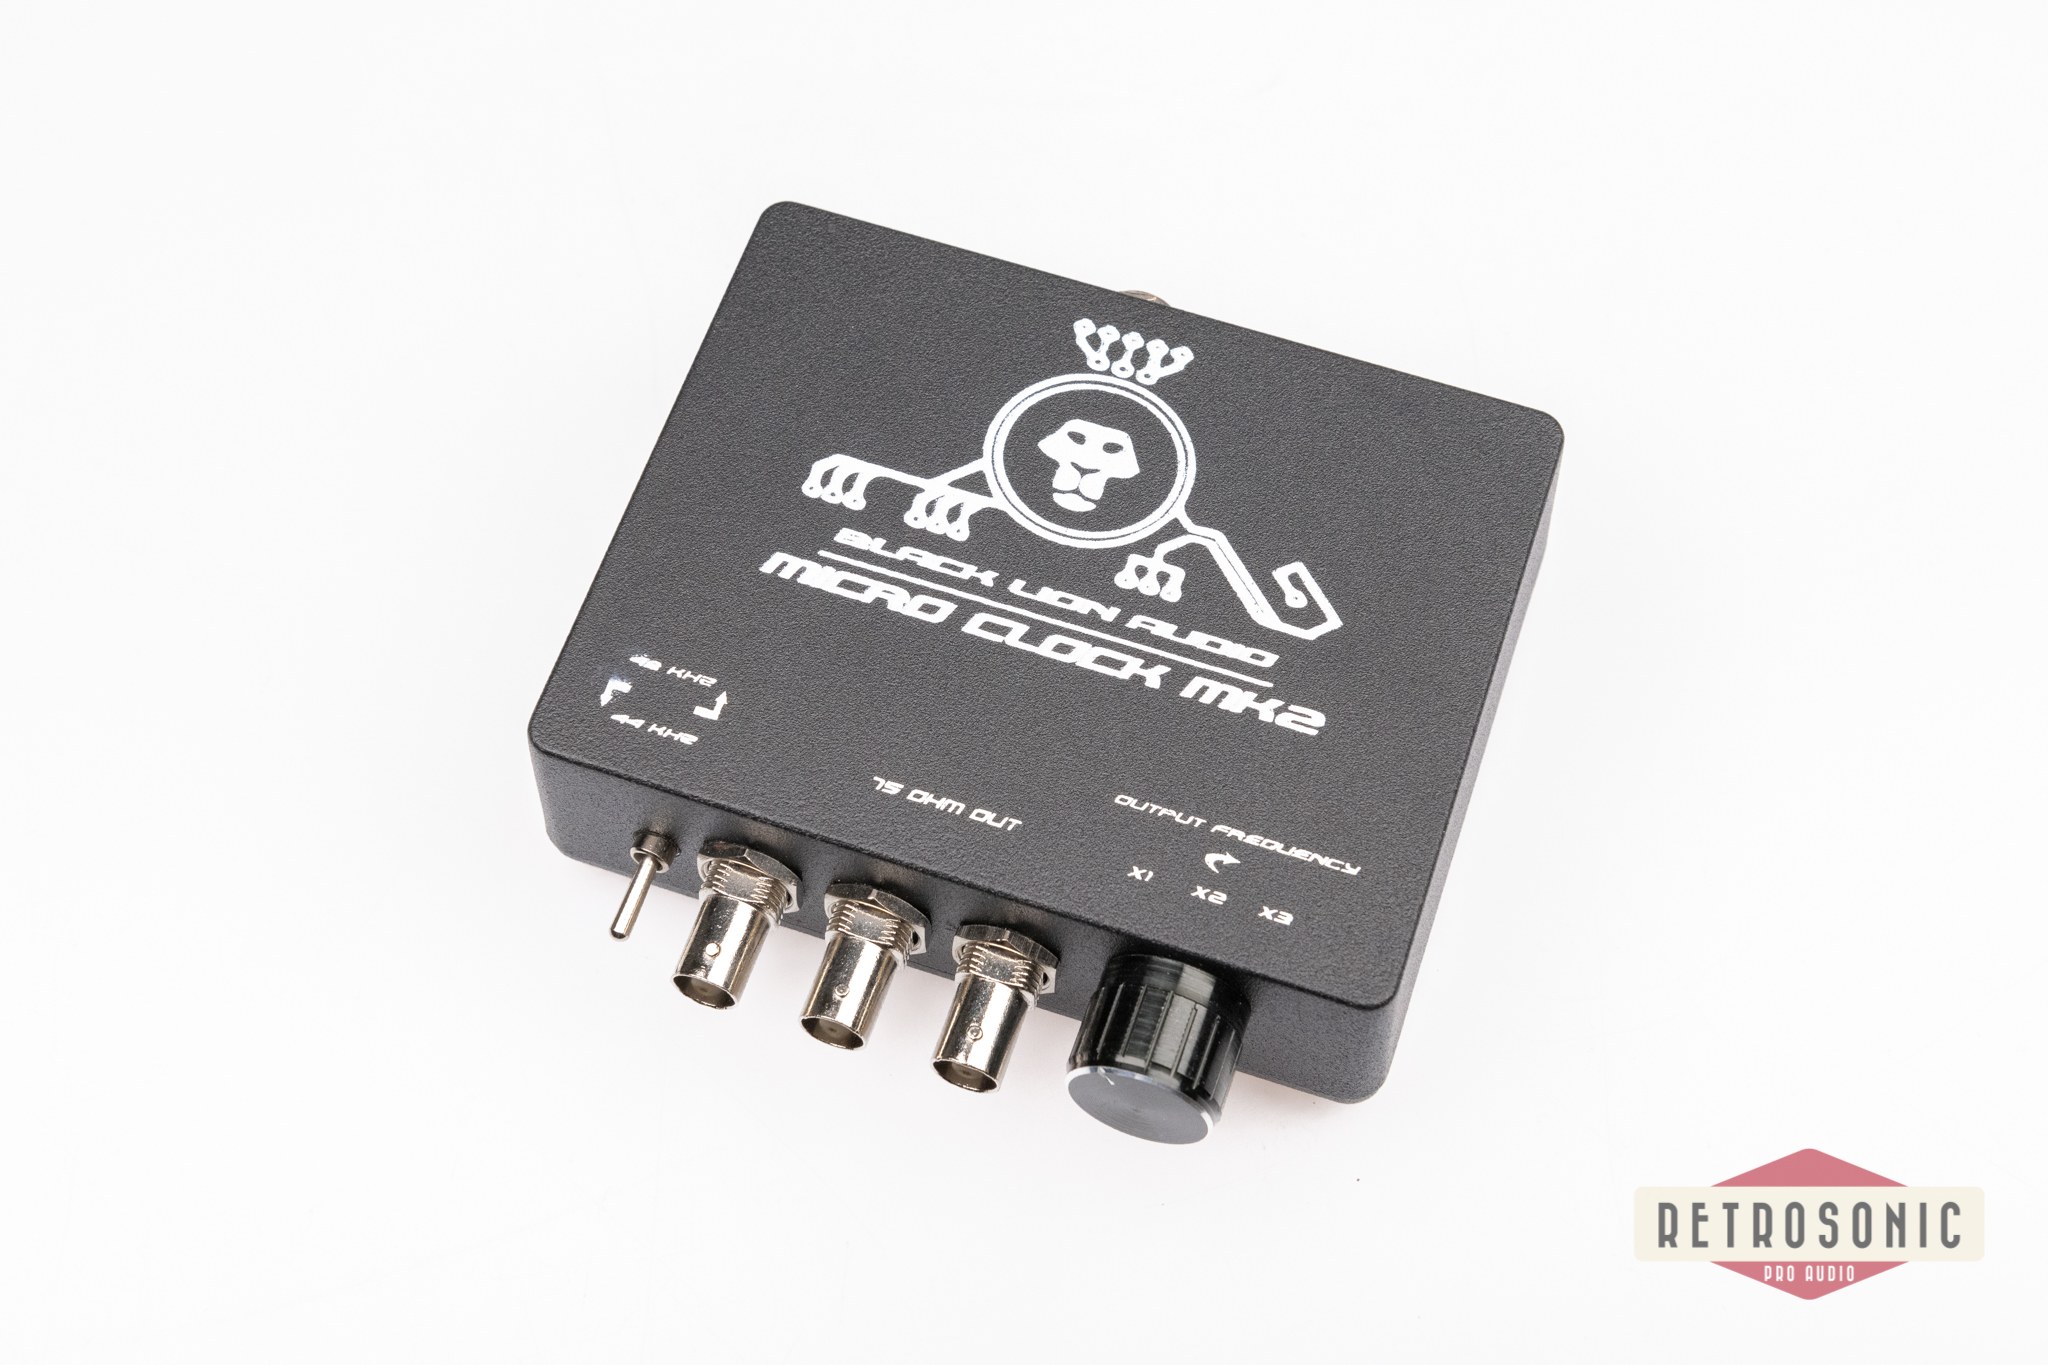 Black Lion Audio Micro Clock Mk2